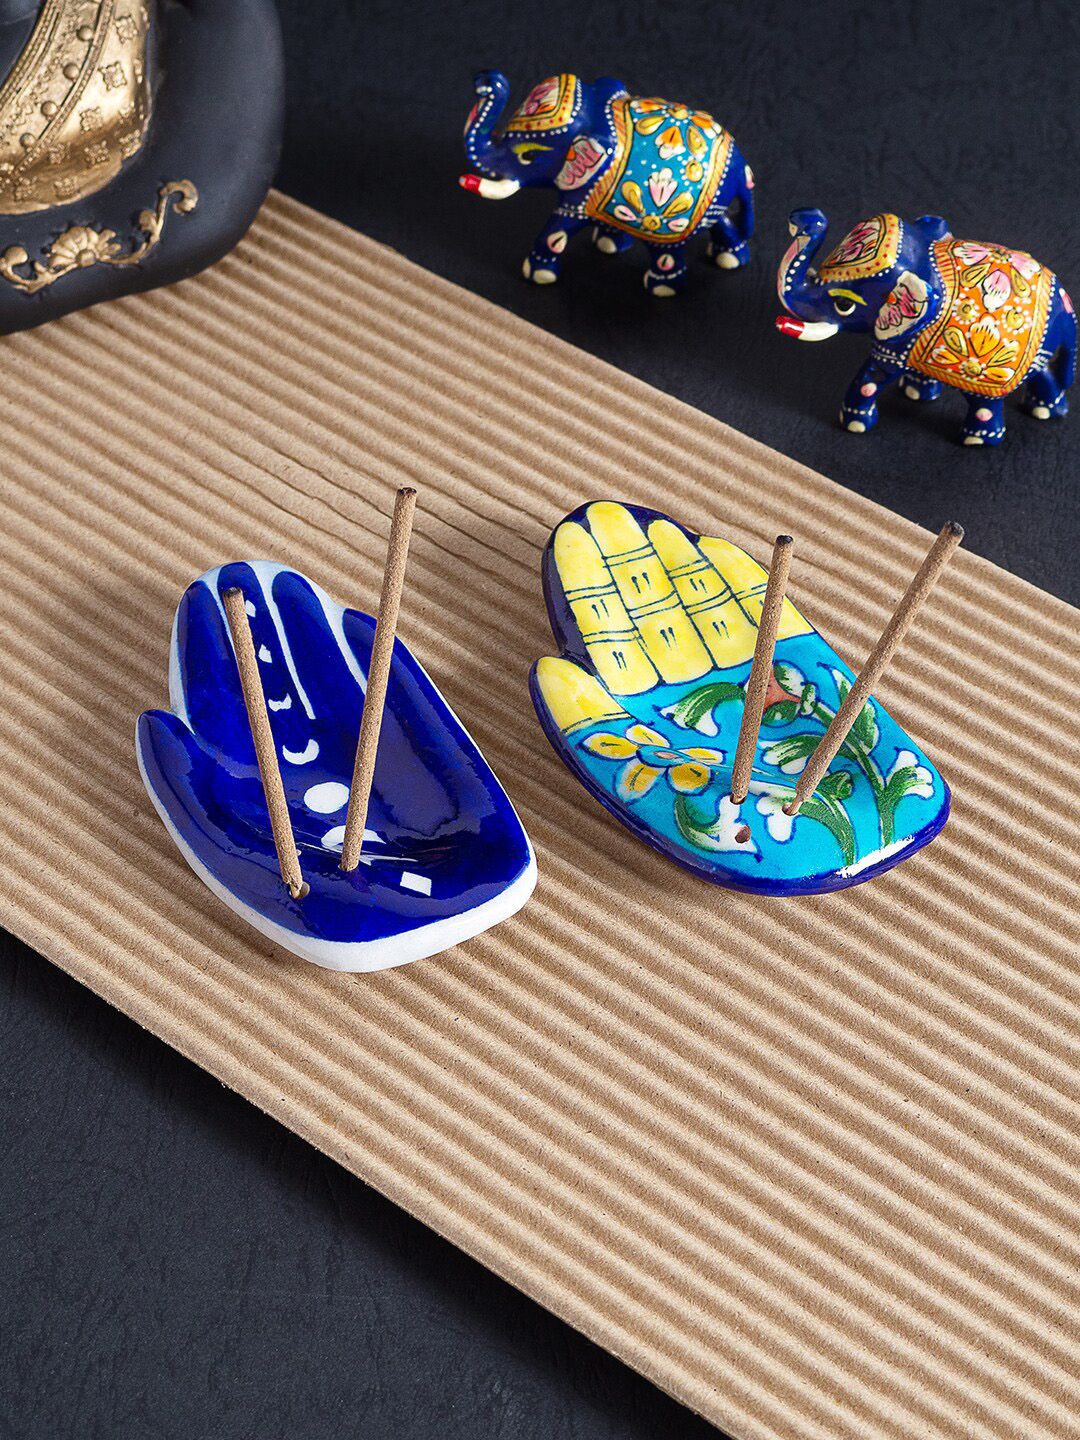 Golden Peacock Set Of 2 Blue Ceramic Incense Stick Holder Price in India